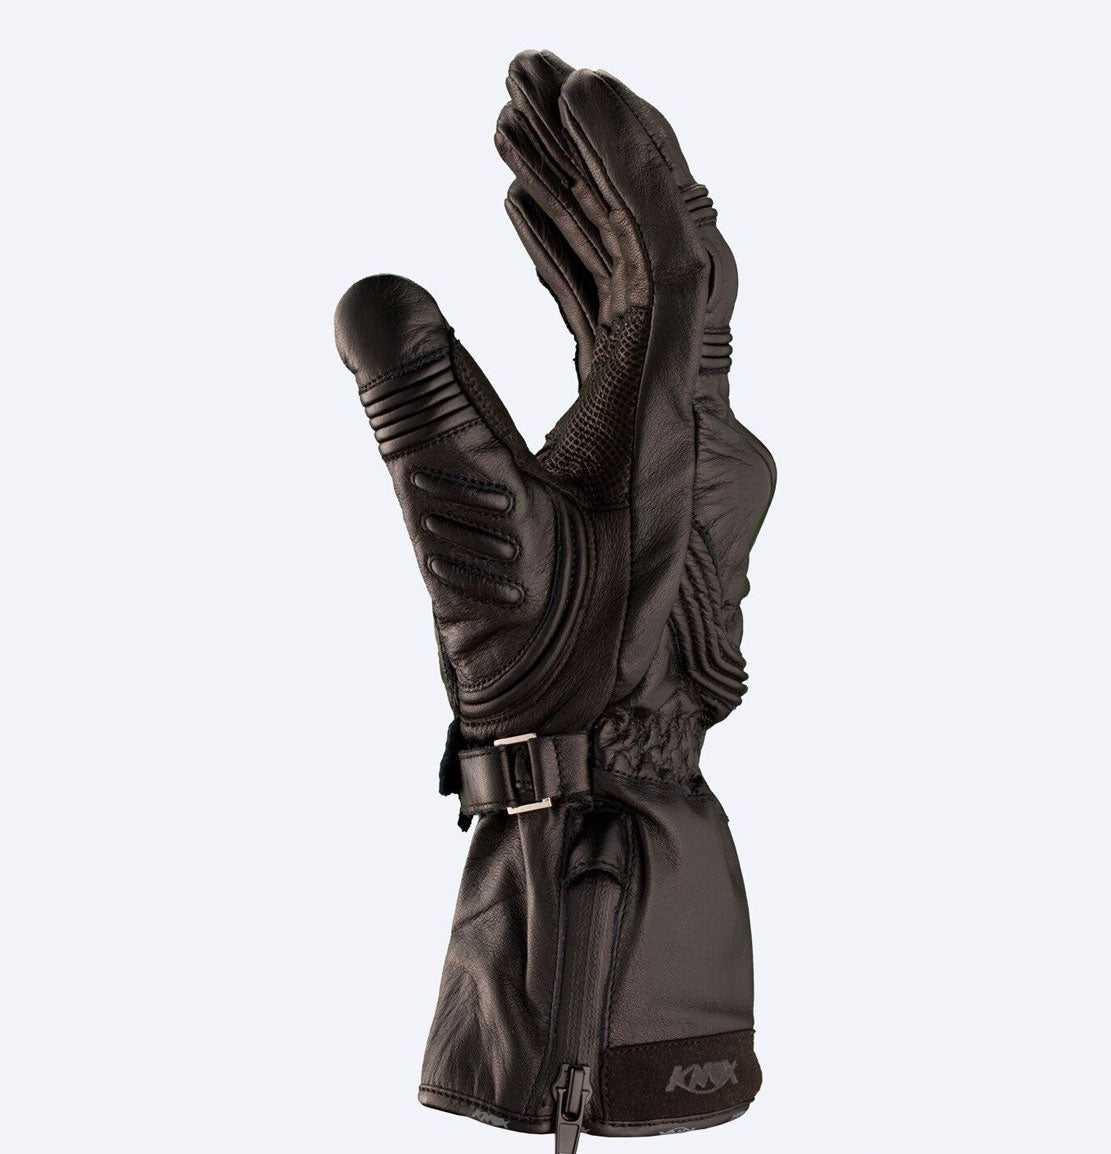 KNOX - Covert Glove - Black